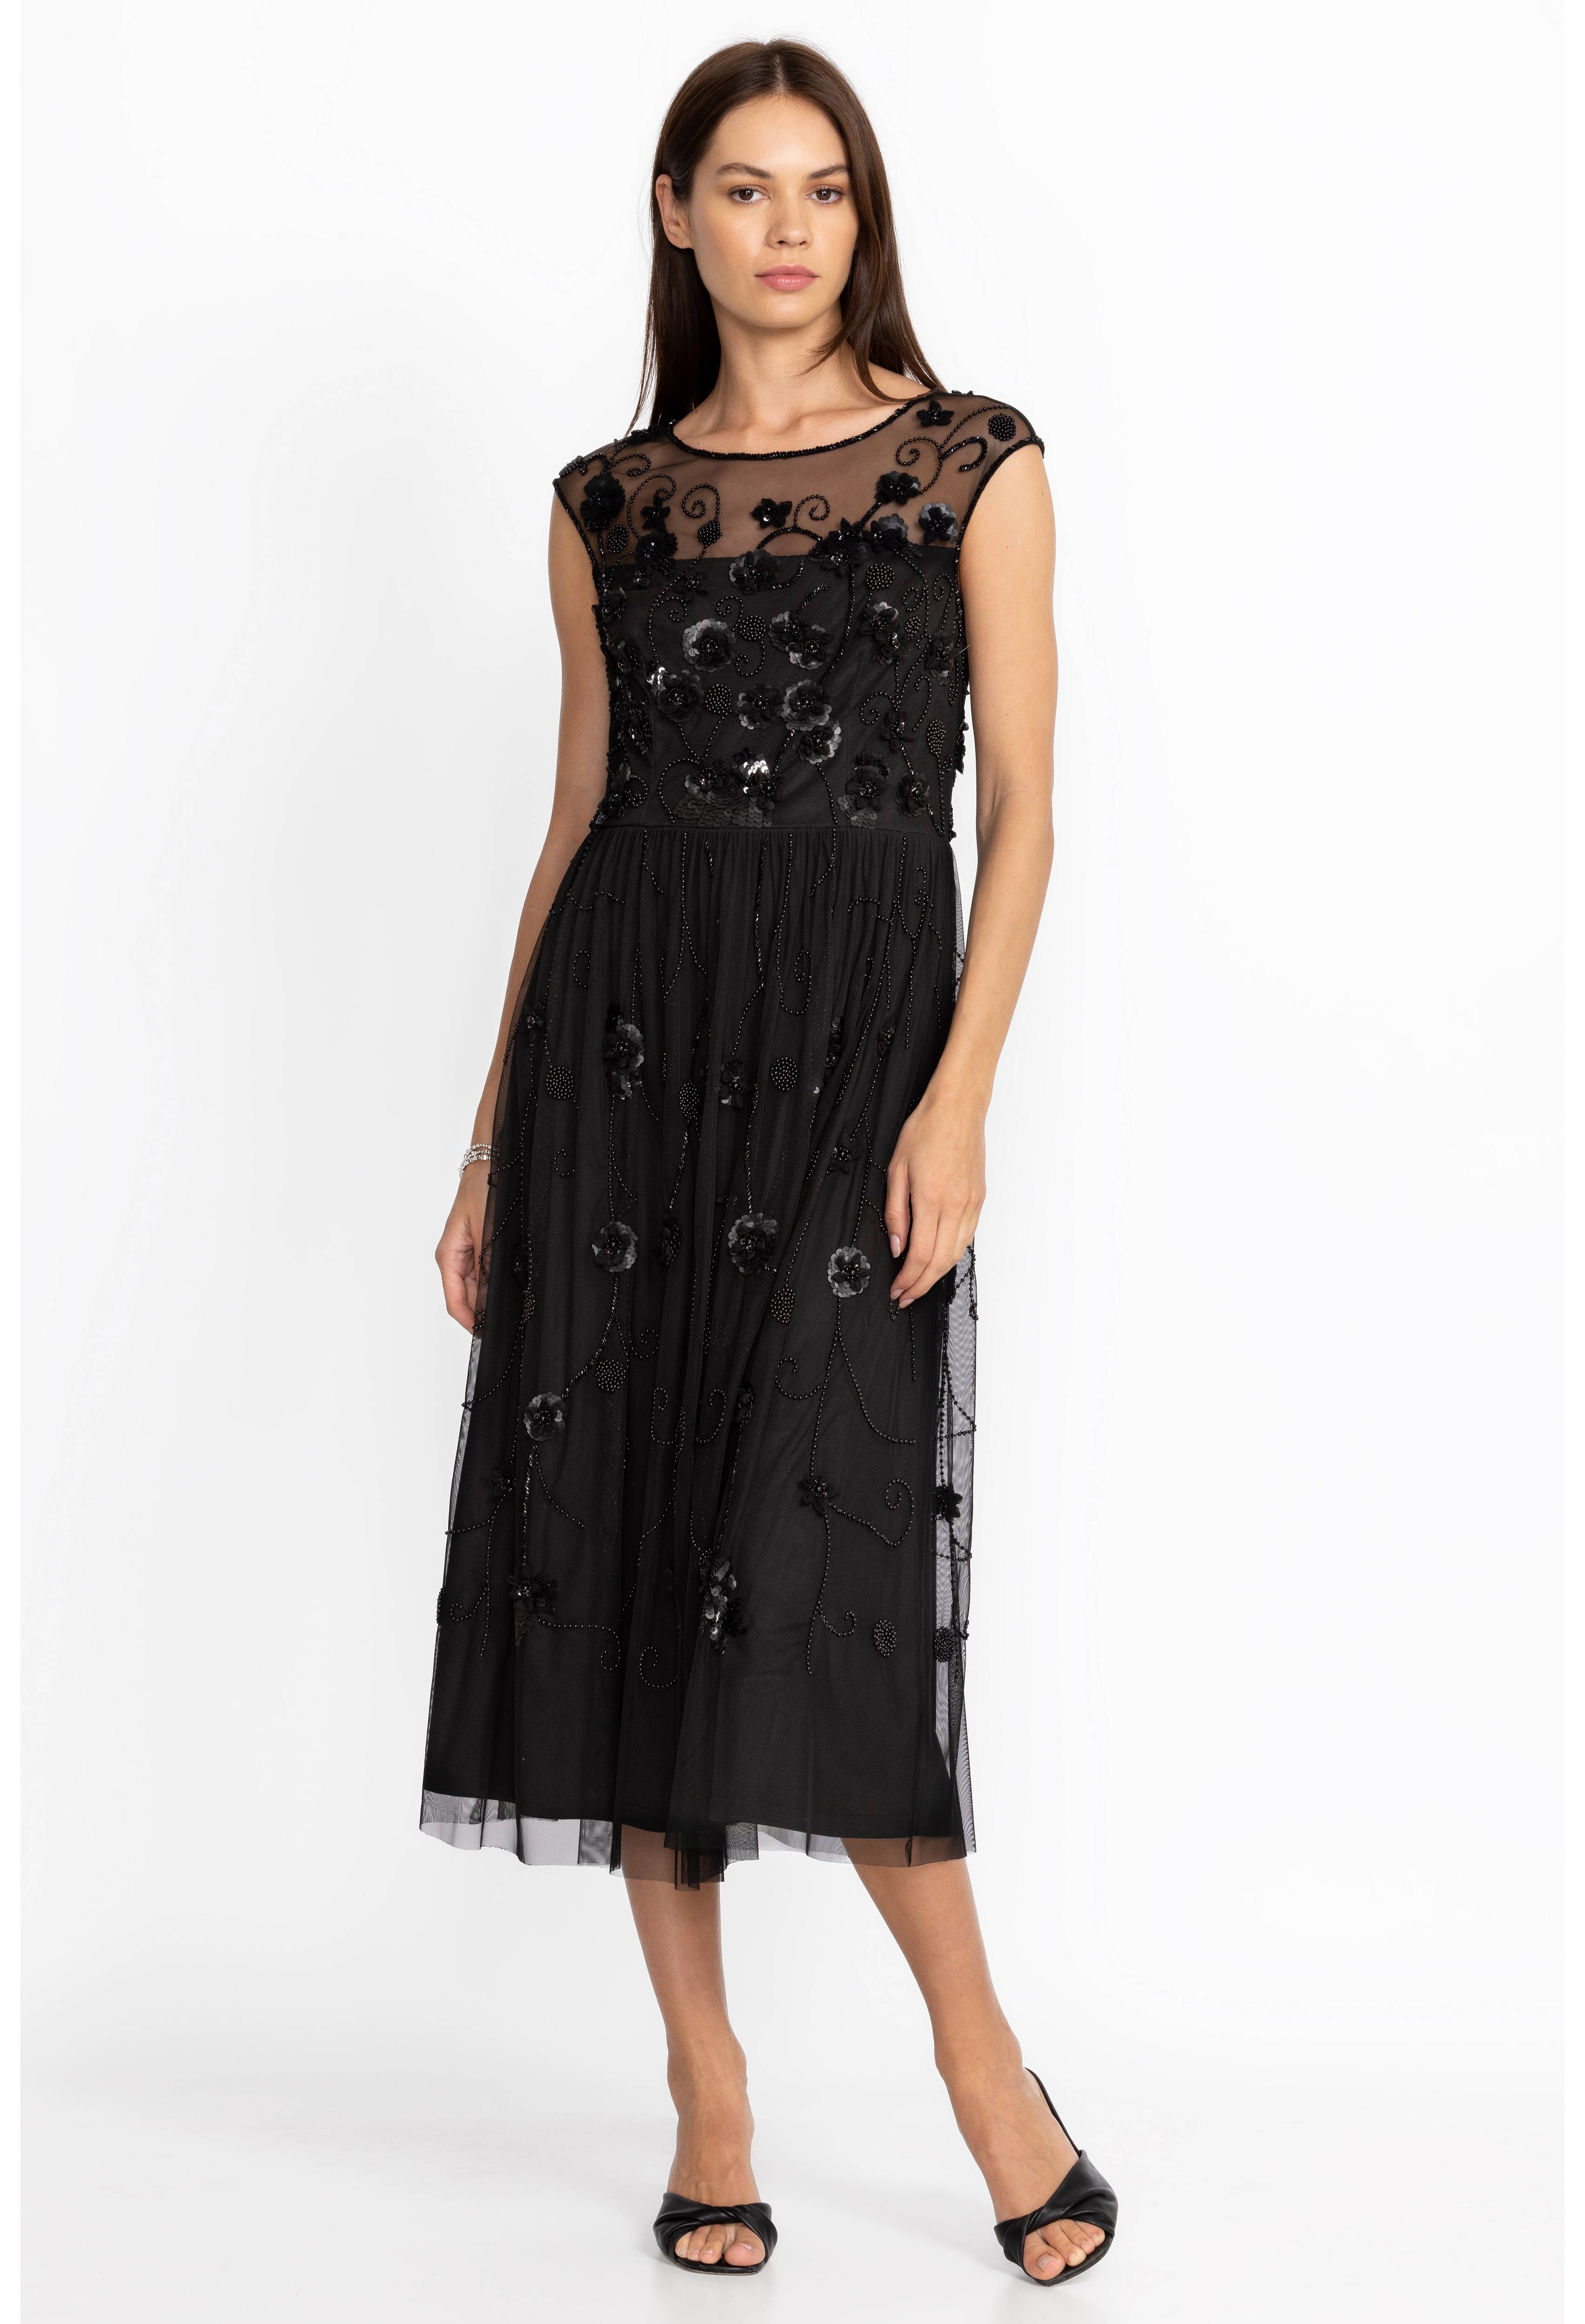 black beaded dress